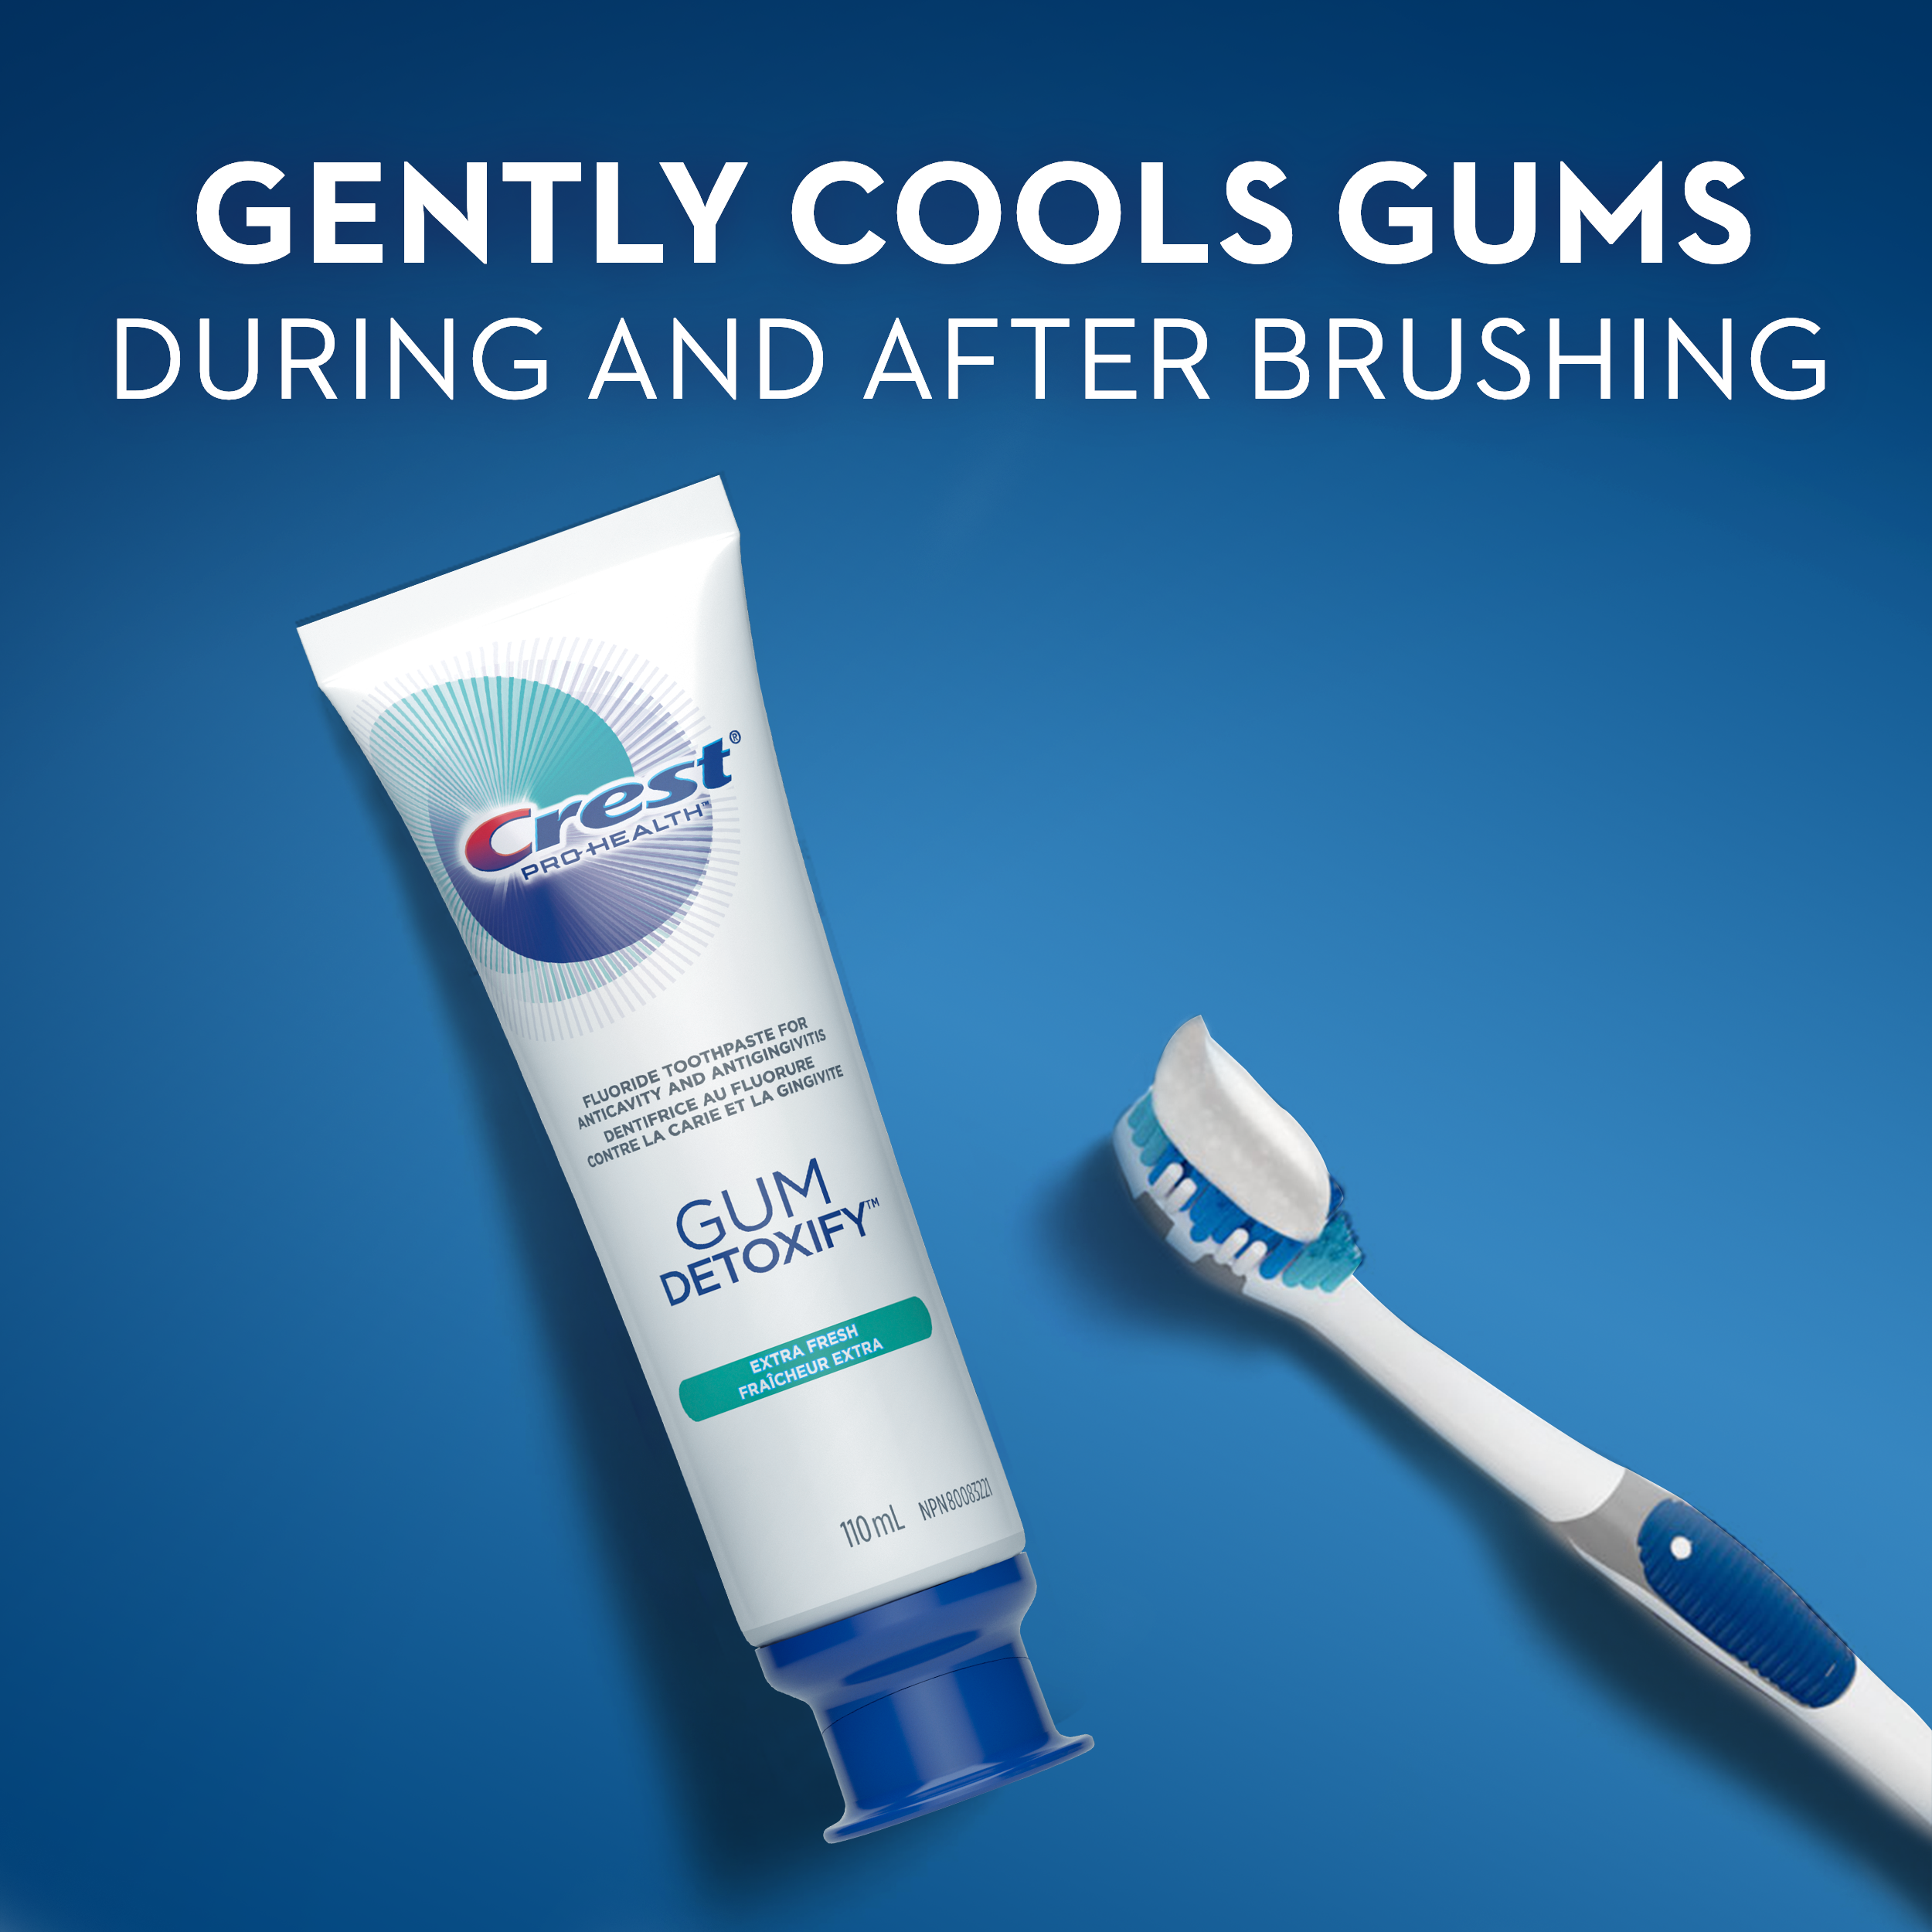 Product Gallery 3 - Gum detoxify extra fresh - Image 4